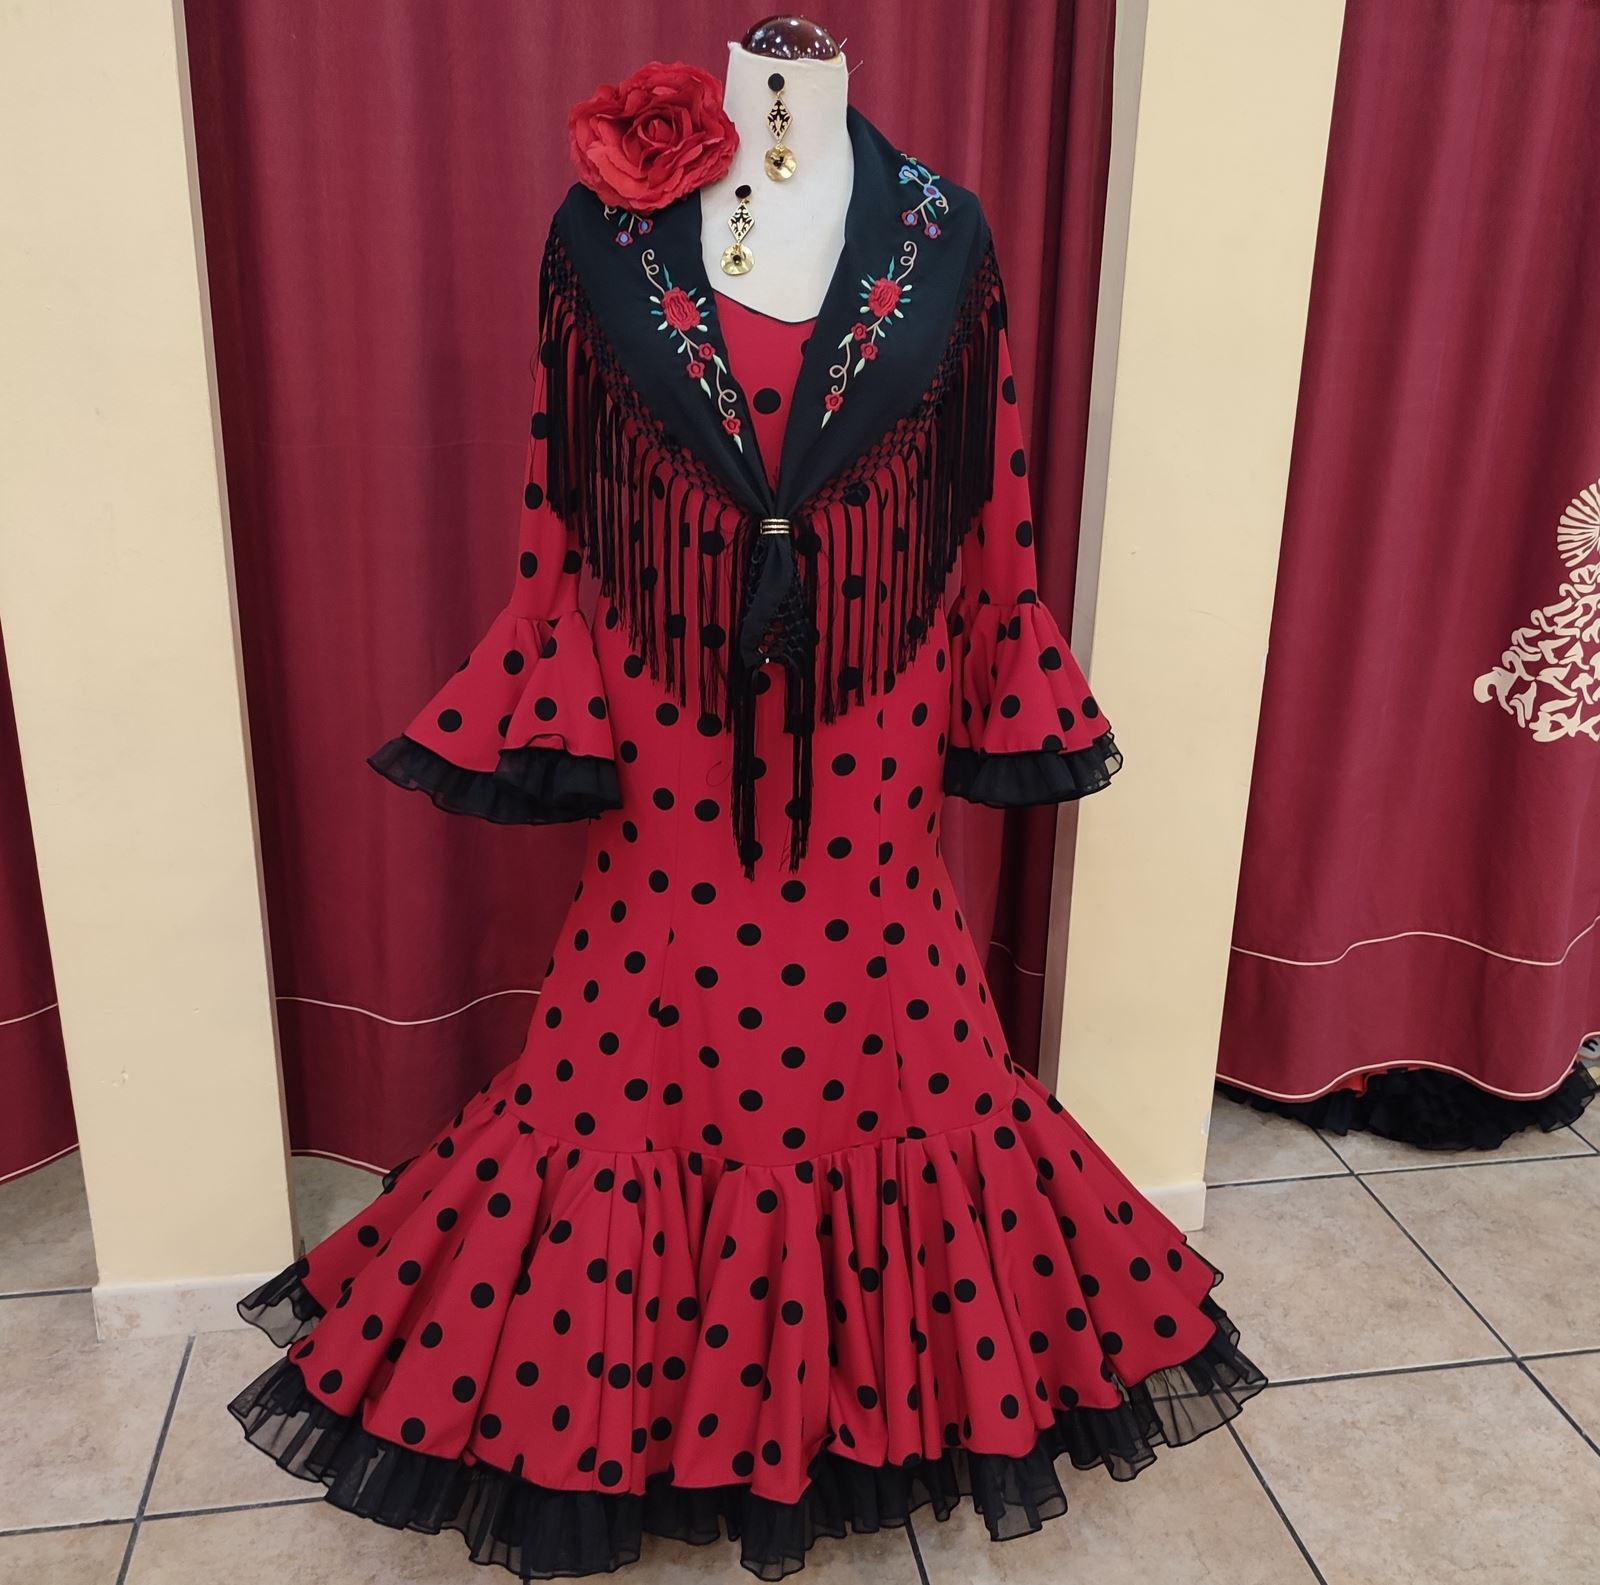 sector rigidez complicaciones Vestido Flamenca - Modelo Murillo - Rojo Lunar Negro - PEDROCHE GITANA